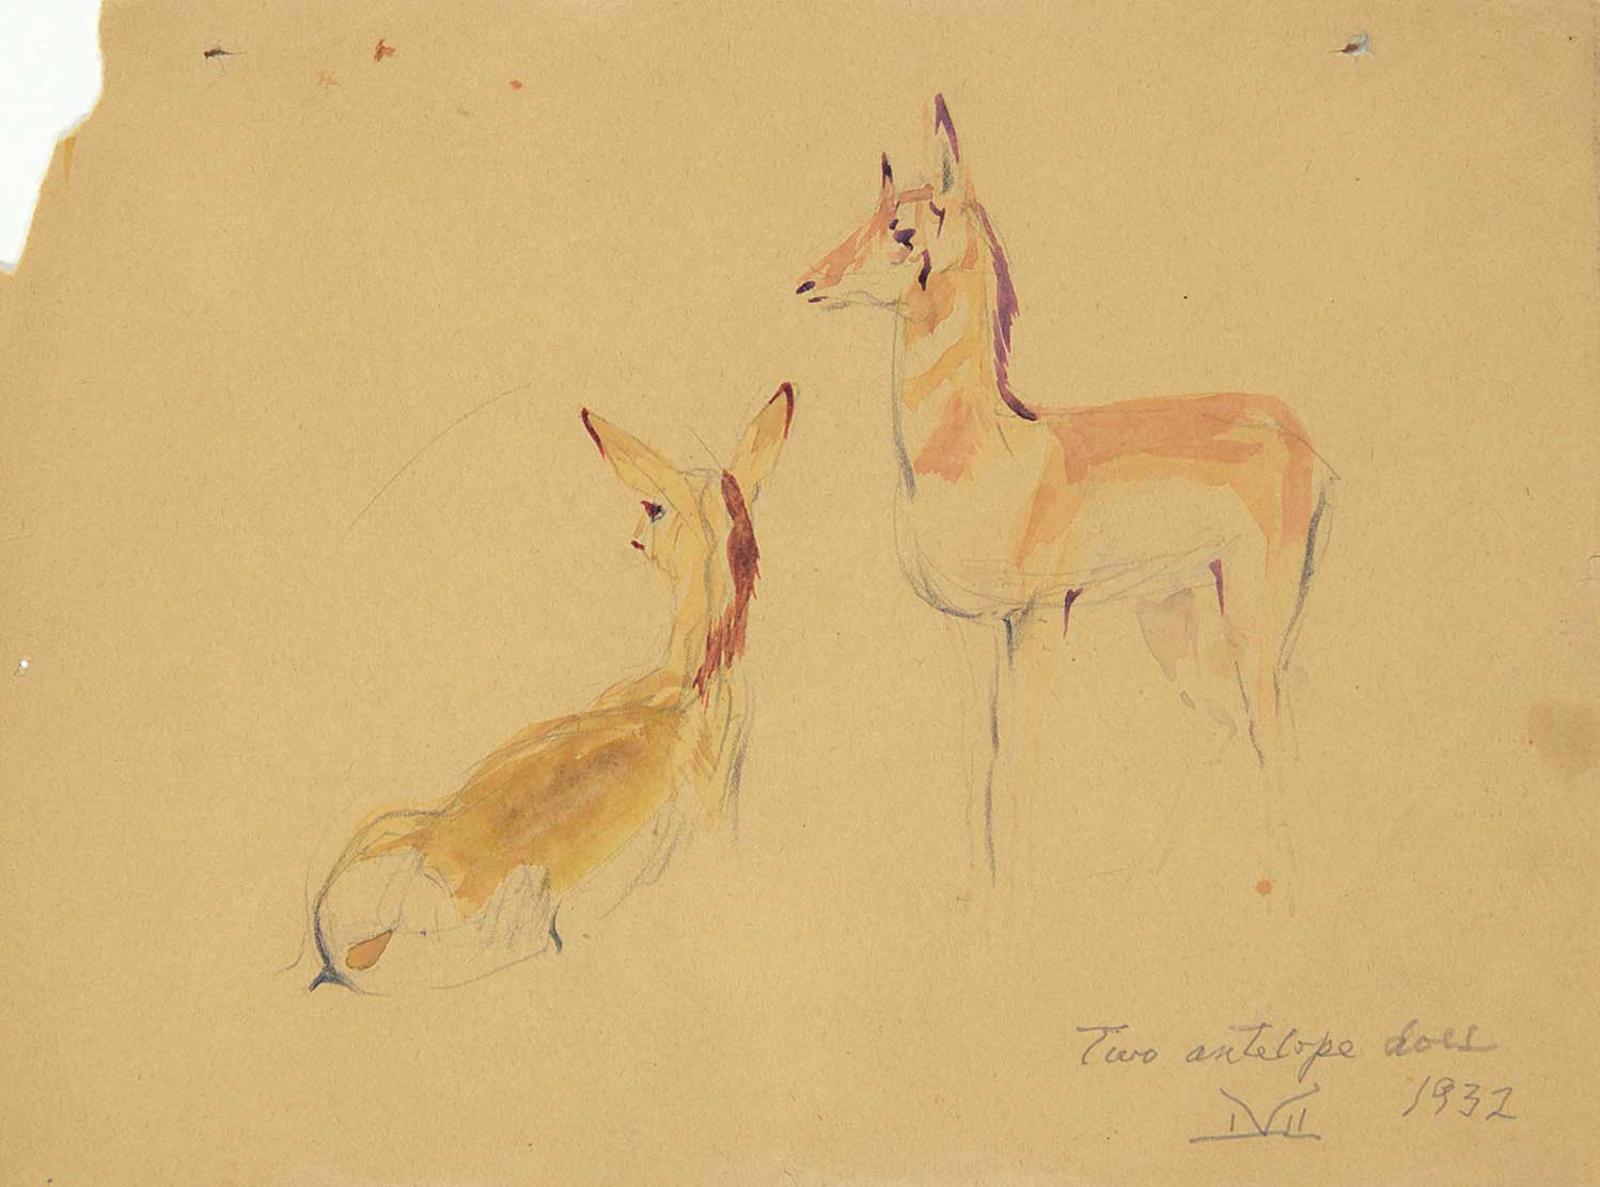 Illingworth Holey (Buck) Kerr (1905-1989) - Two Antelope Does